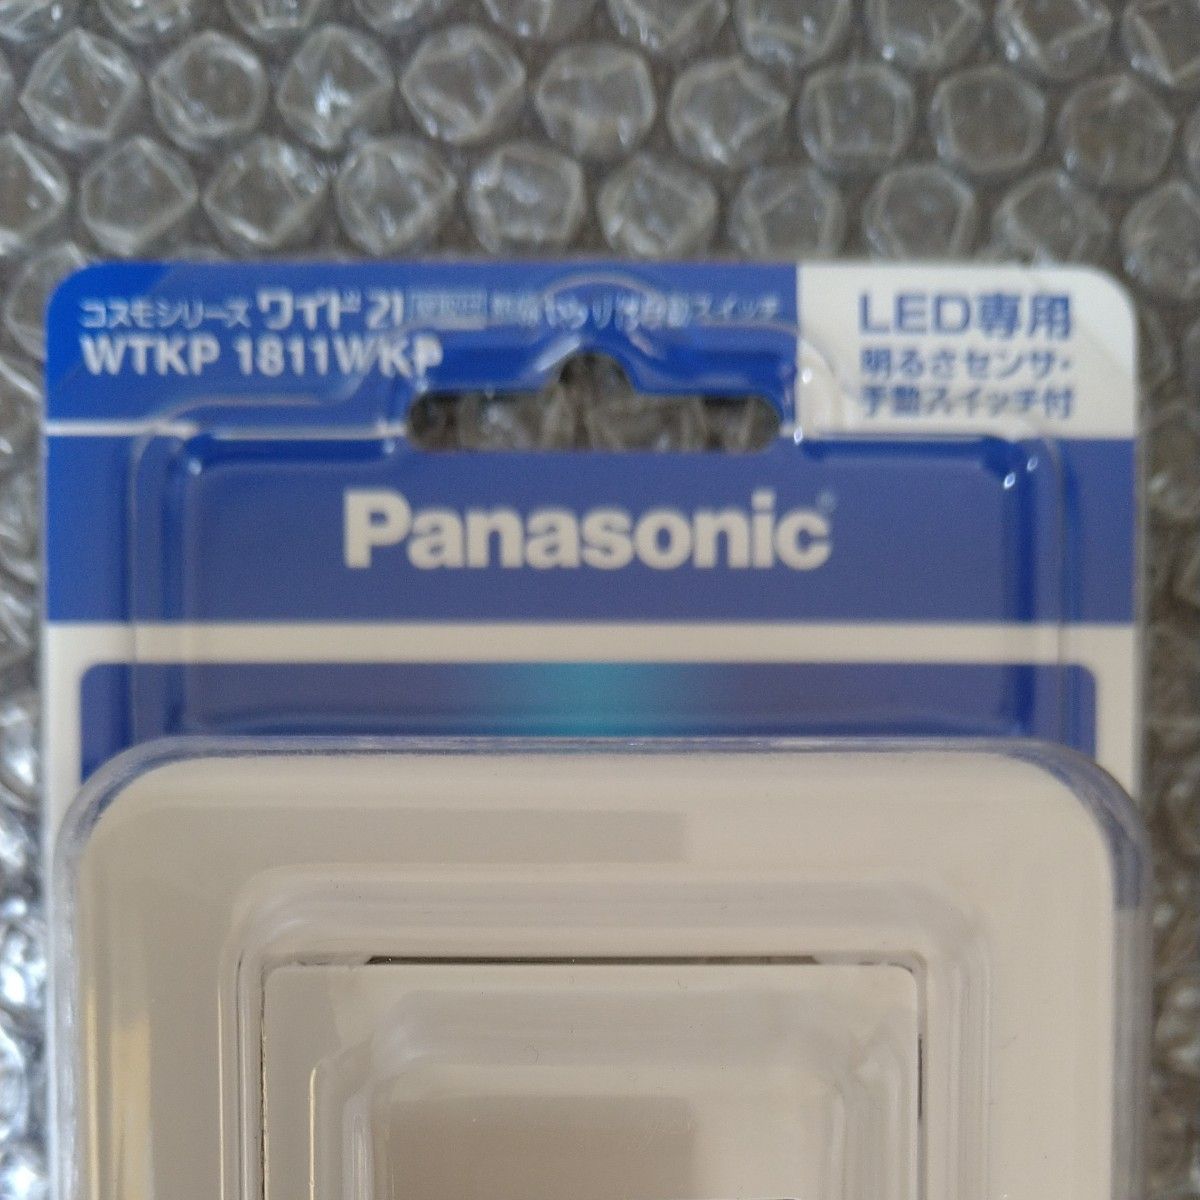 PANASONIC  ワイド21  熱線センサ付自動スイッチ WTKP1811WKP